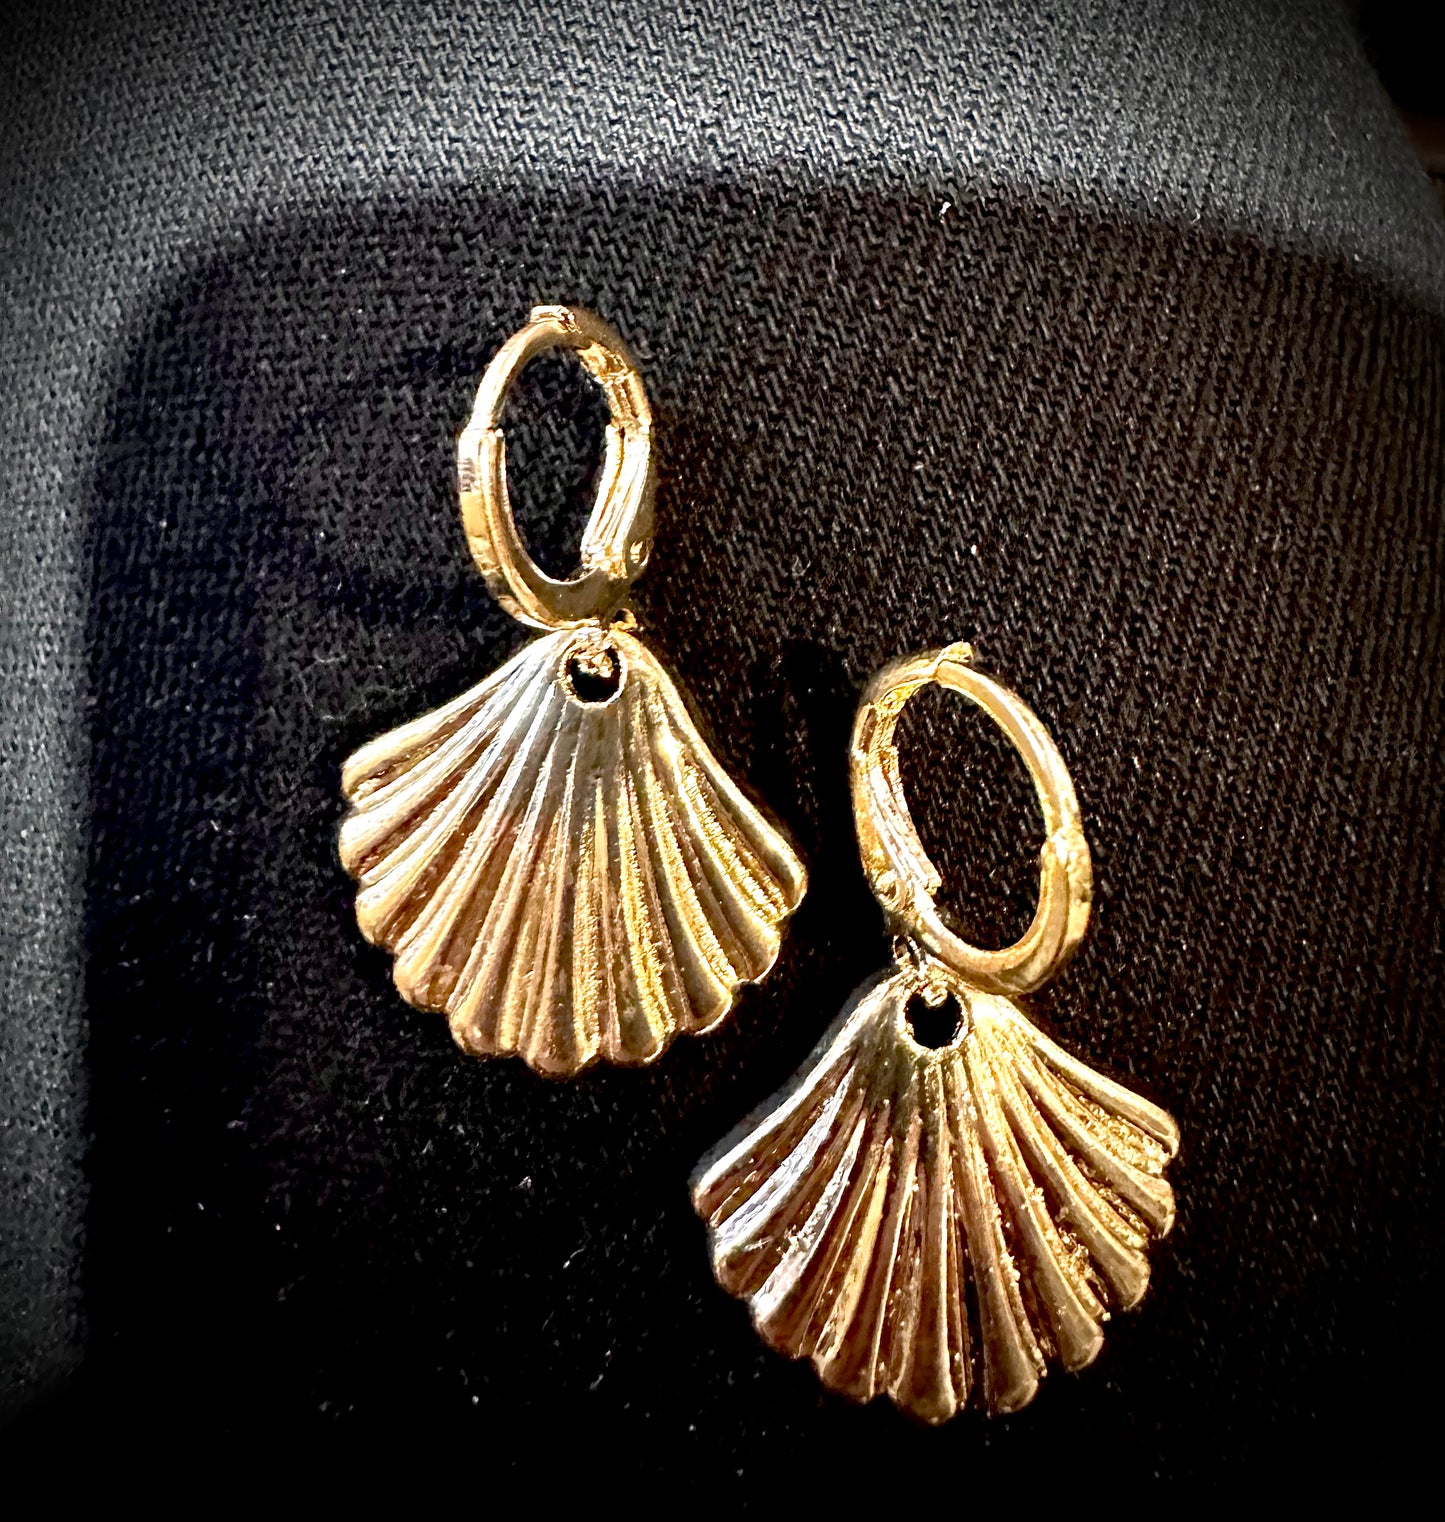 Small shell earrings